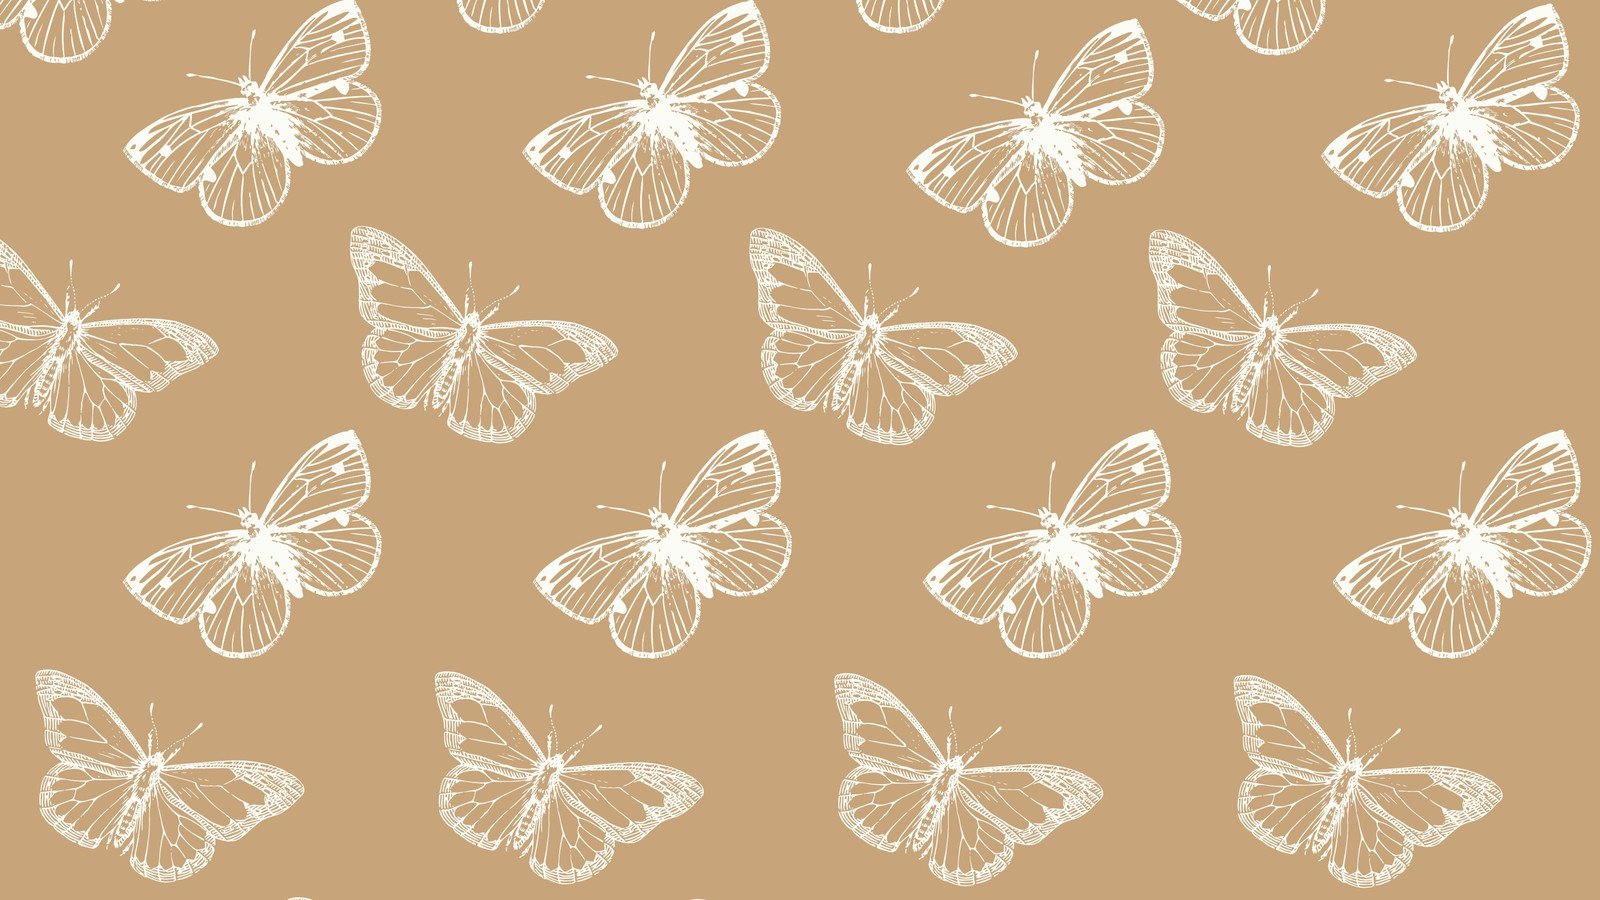 Free and customizable spring desktop wallpaper templates | Canva